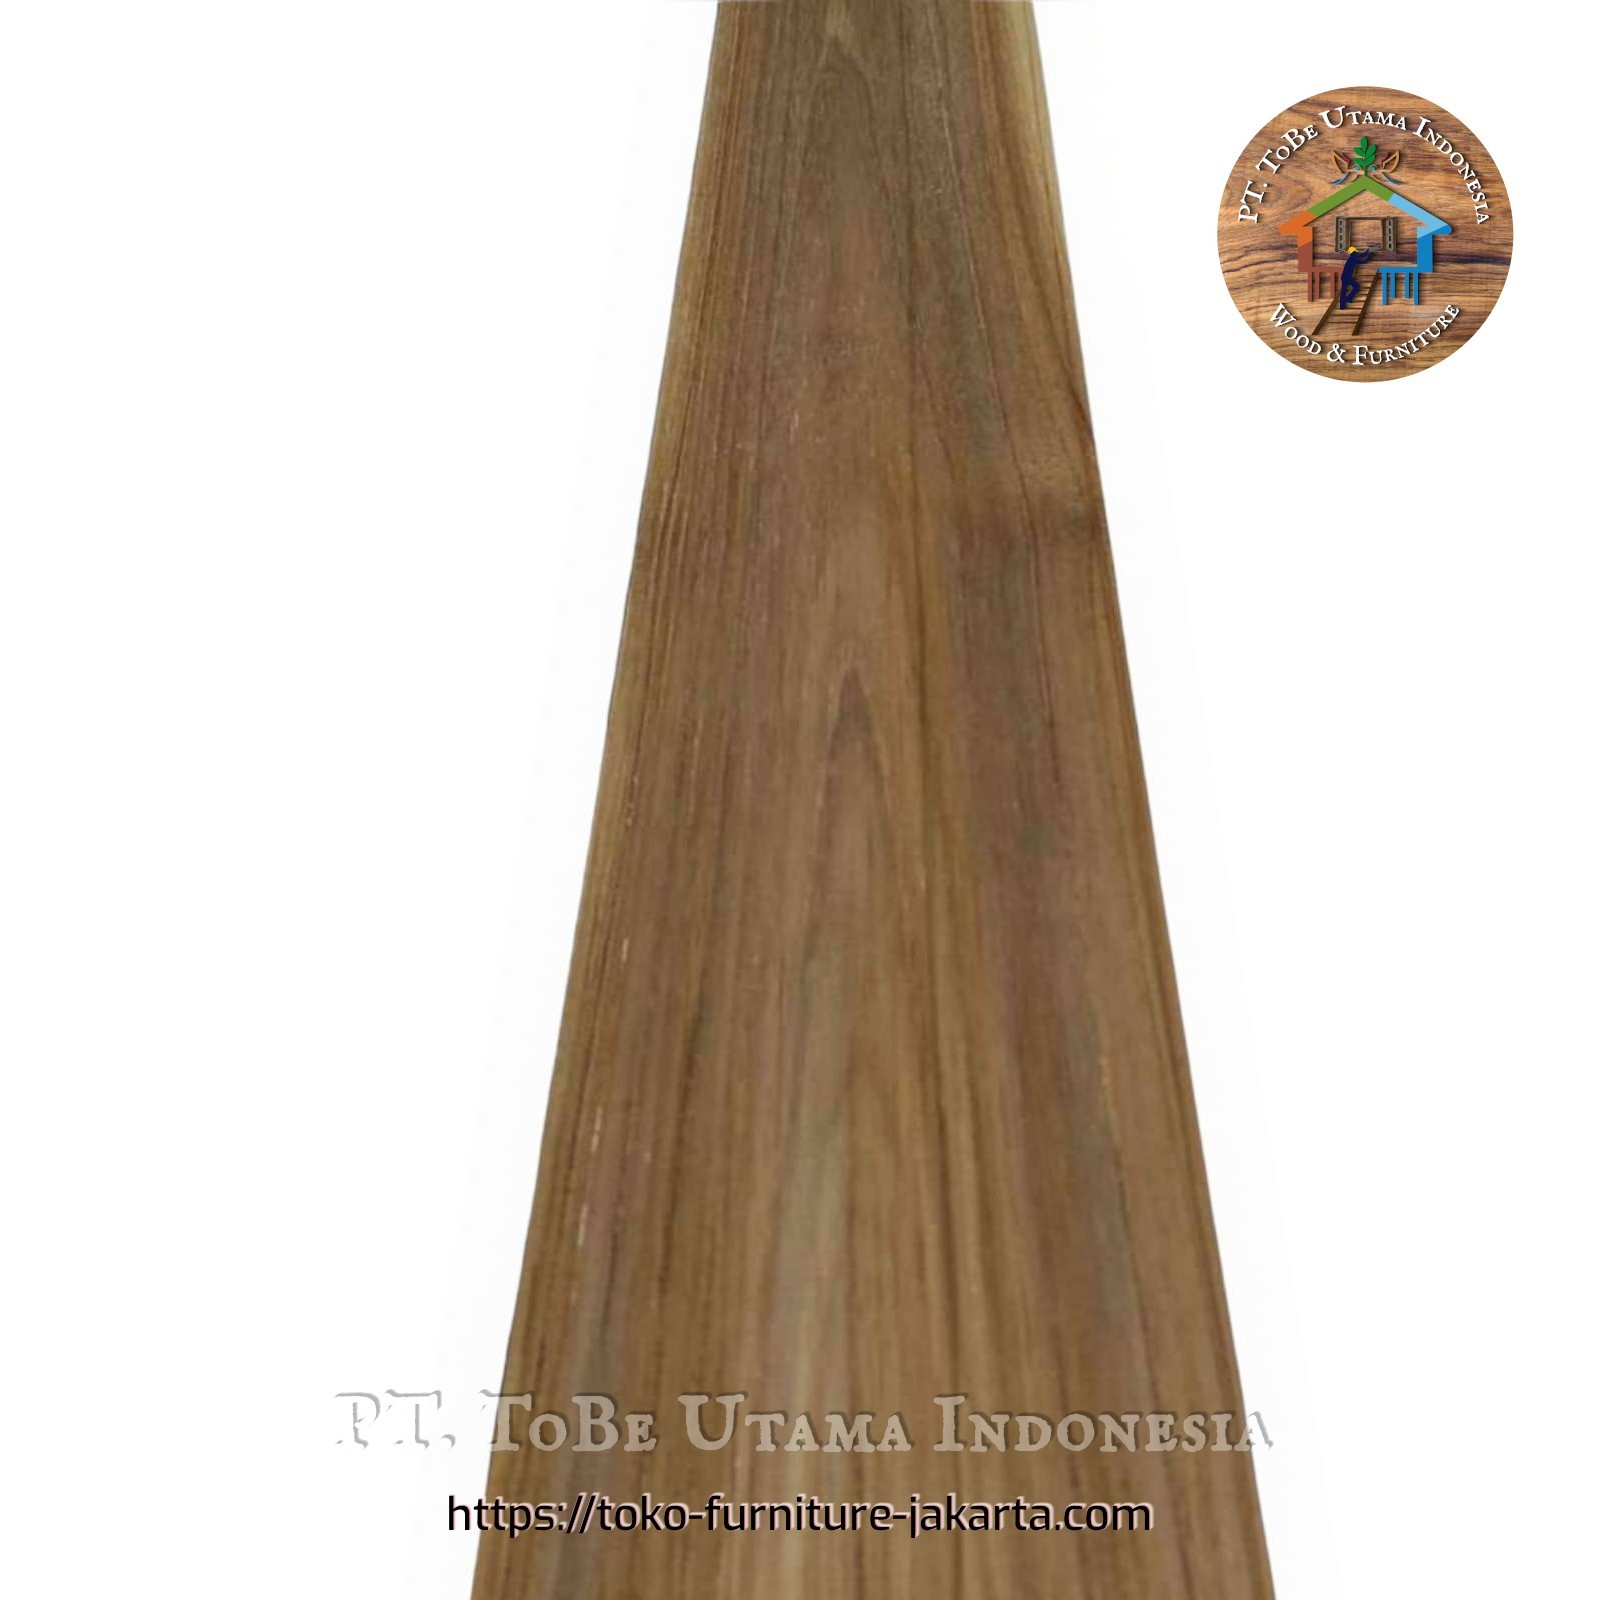 Planks & Decking/Flooring: Teakwood Plank made of teakwood (image 1 of 1).